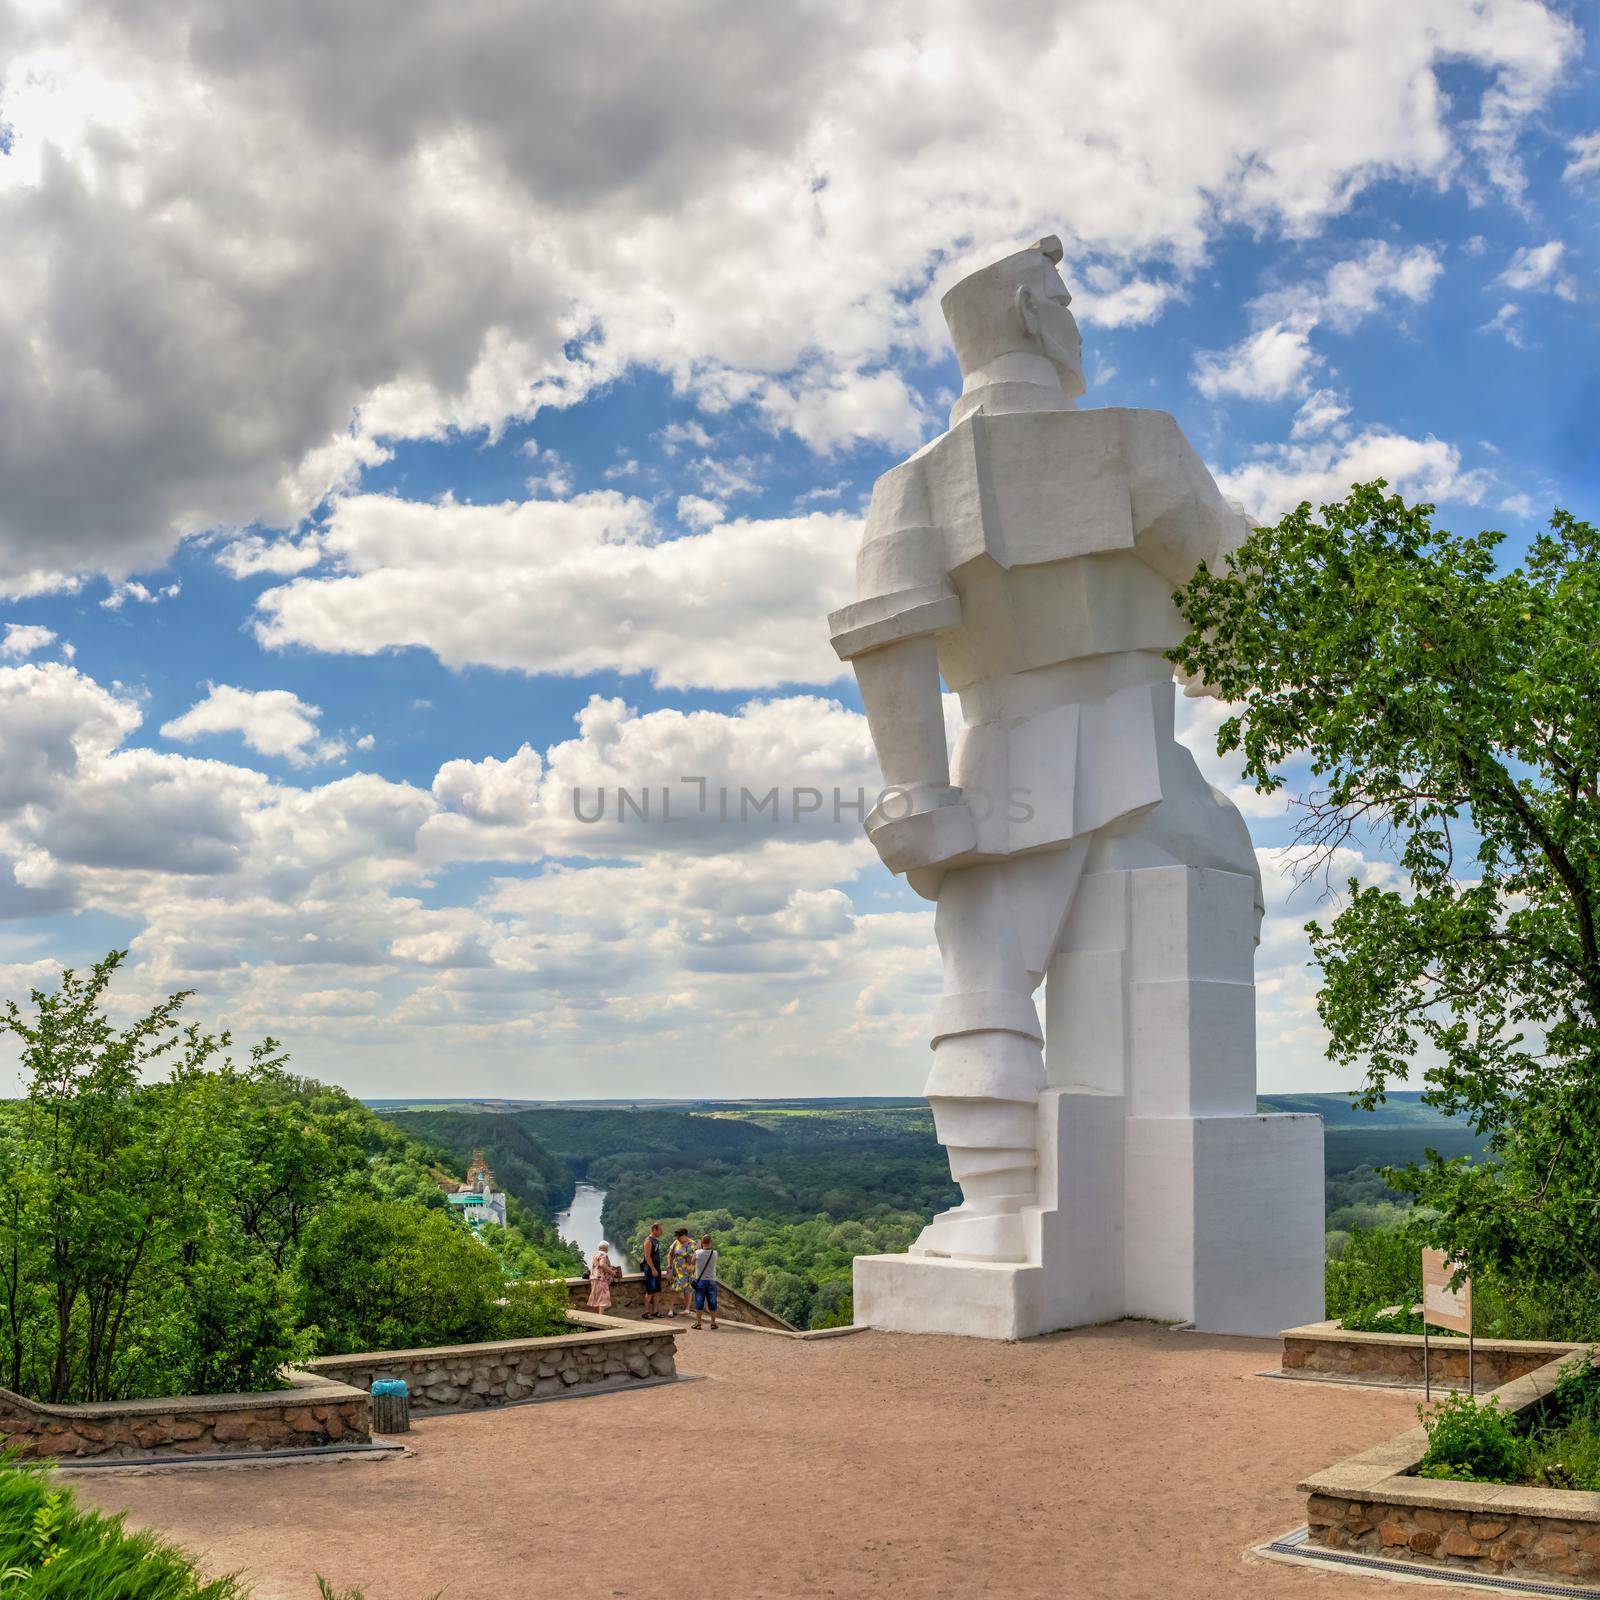 Svyatogorsk, Ukraine 07.16.2020.  Monument to Artem on the mountain above the Svyatogorsk or Sviatohirsk lavra on a sunny summer day